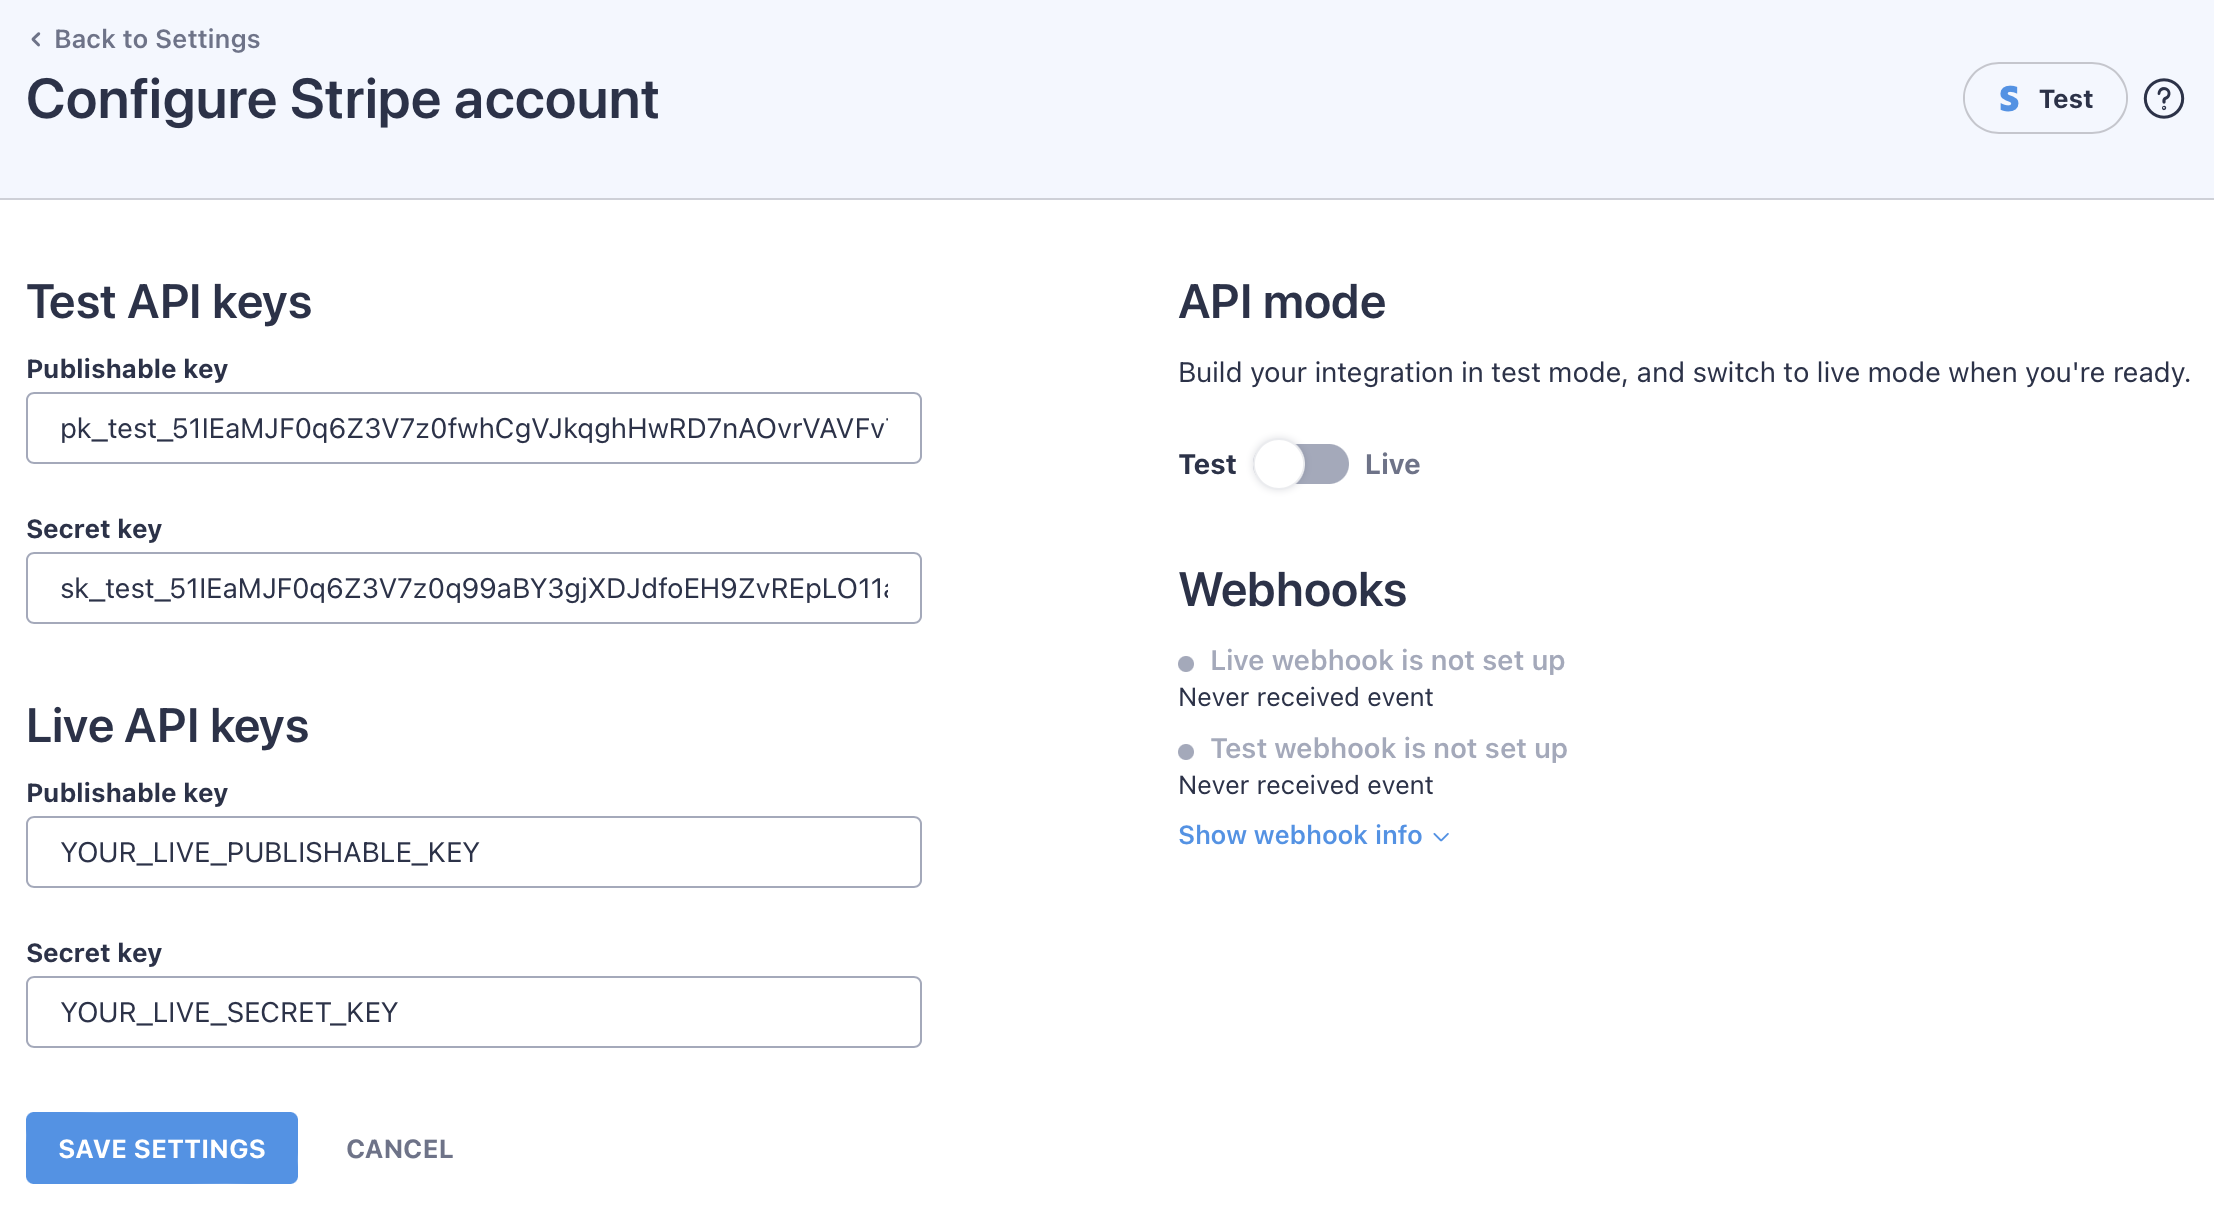 You can configure the WP Full Stripe publishable and secret Stripe API keys on the “Configure Stripe account” page.